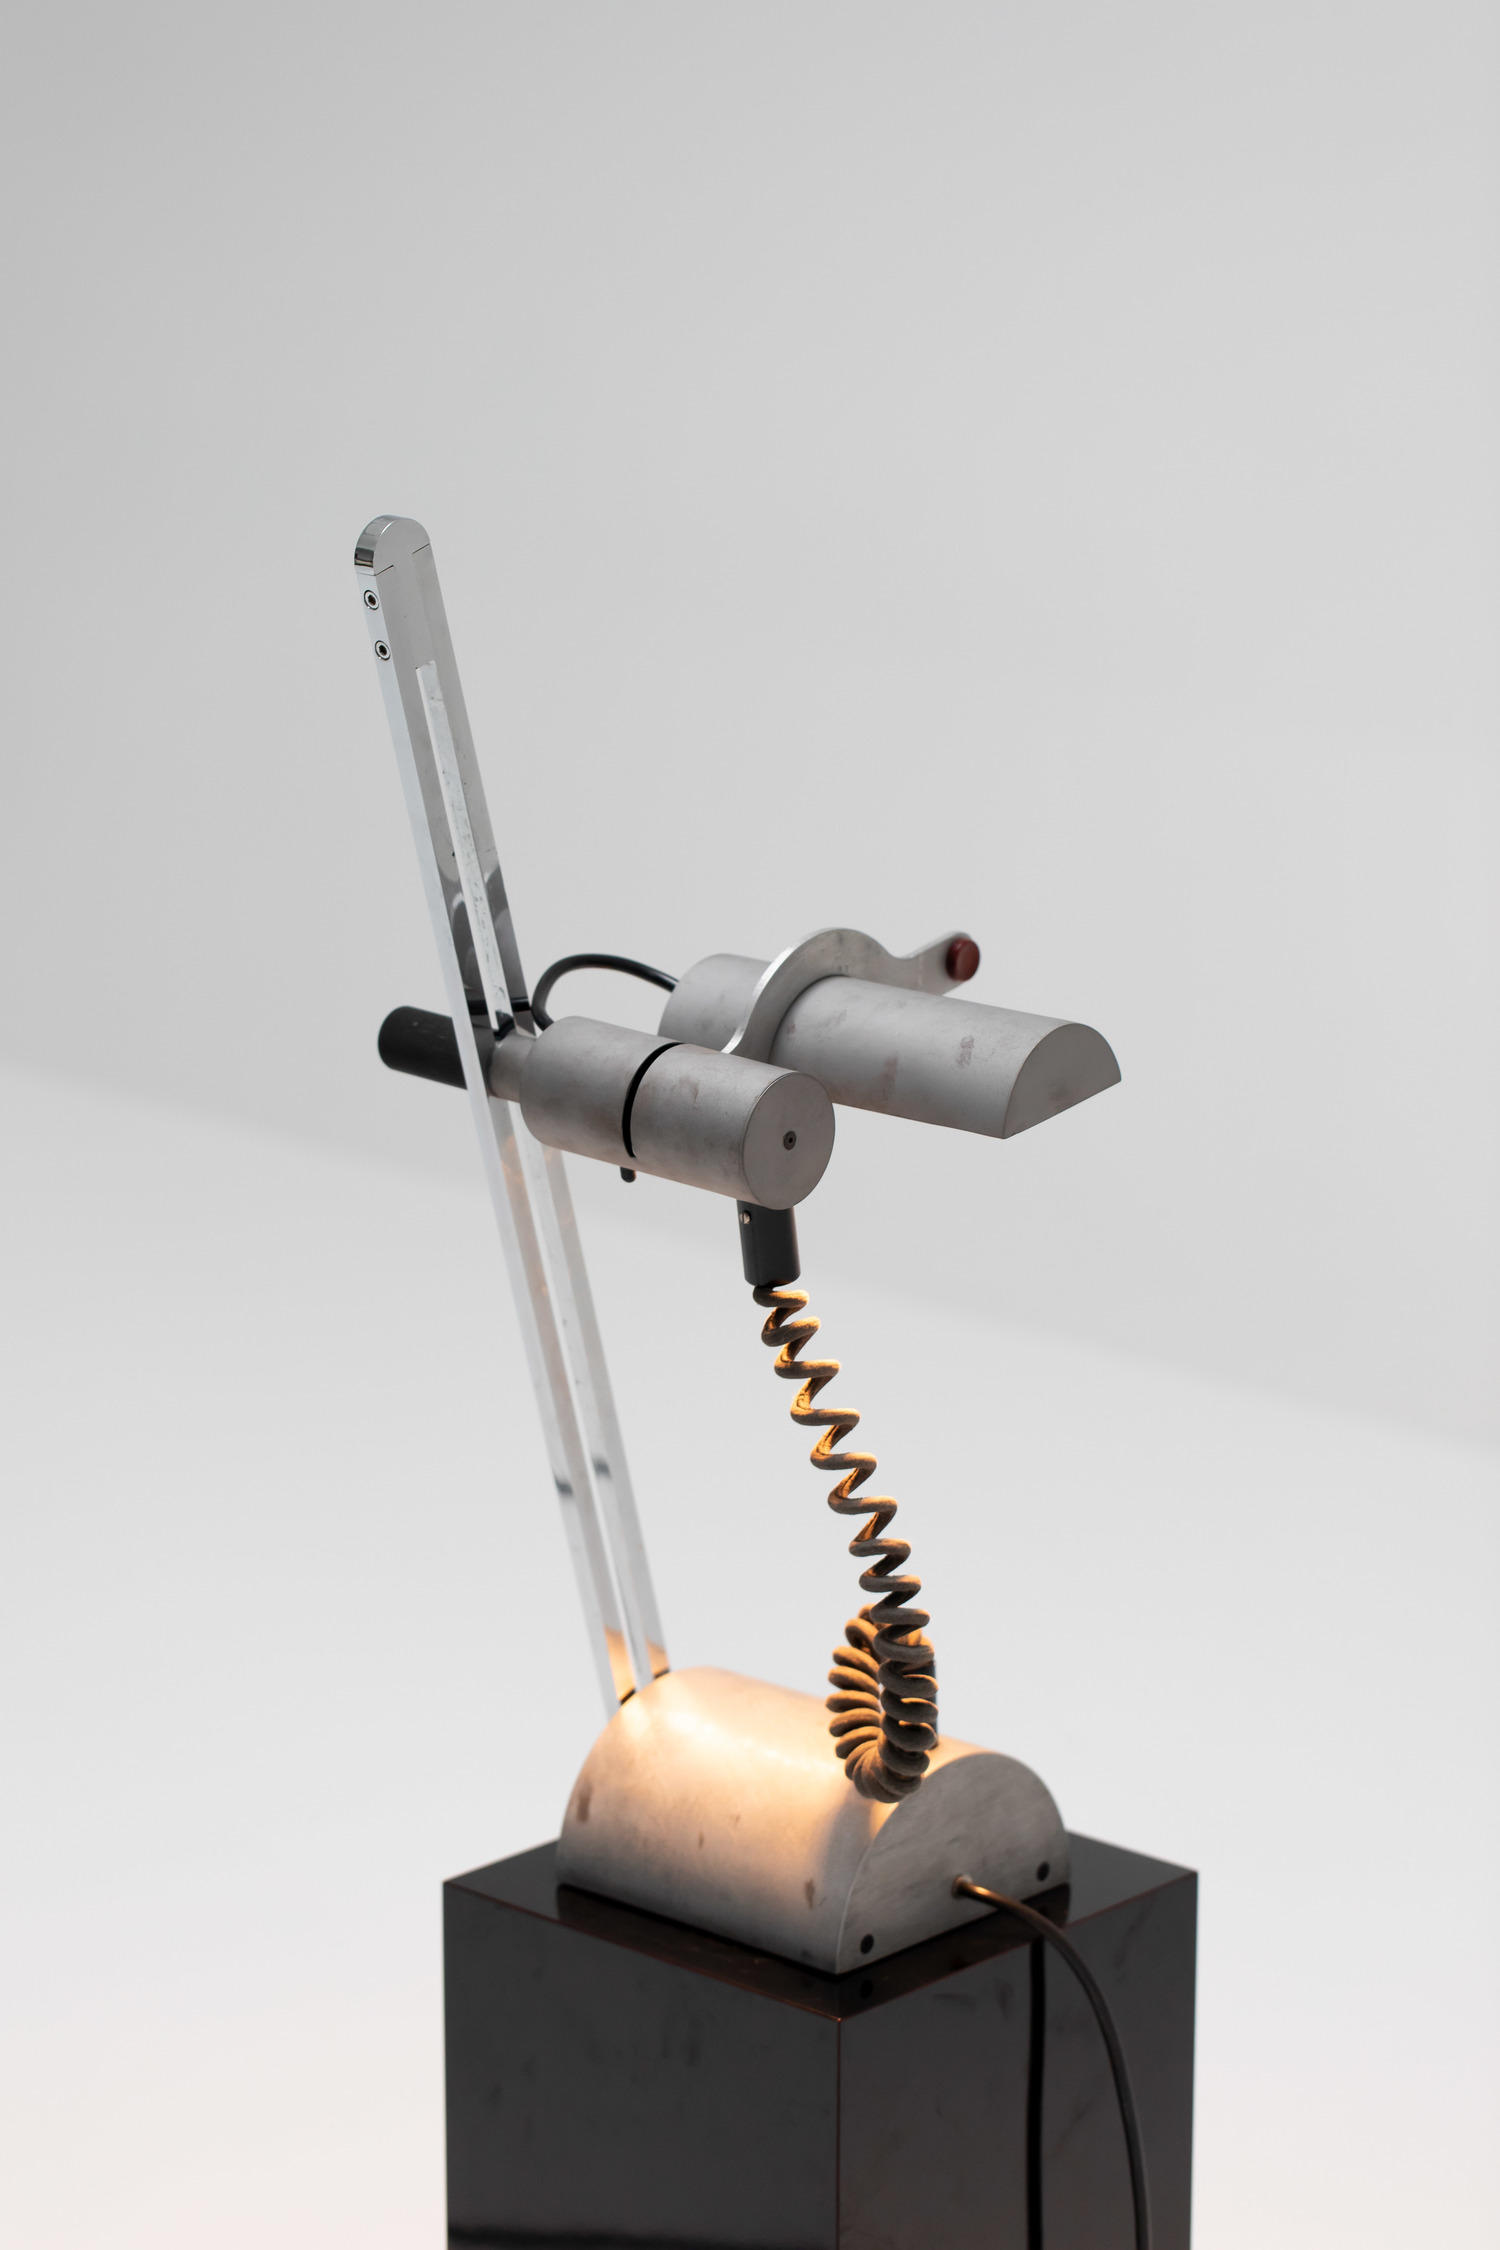 ‘Nelson’ lamp by Ignazia Favata and Claudio Dini for Bieffeplast